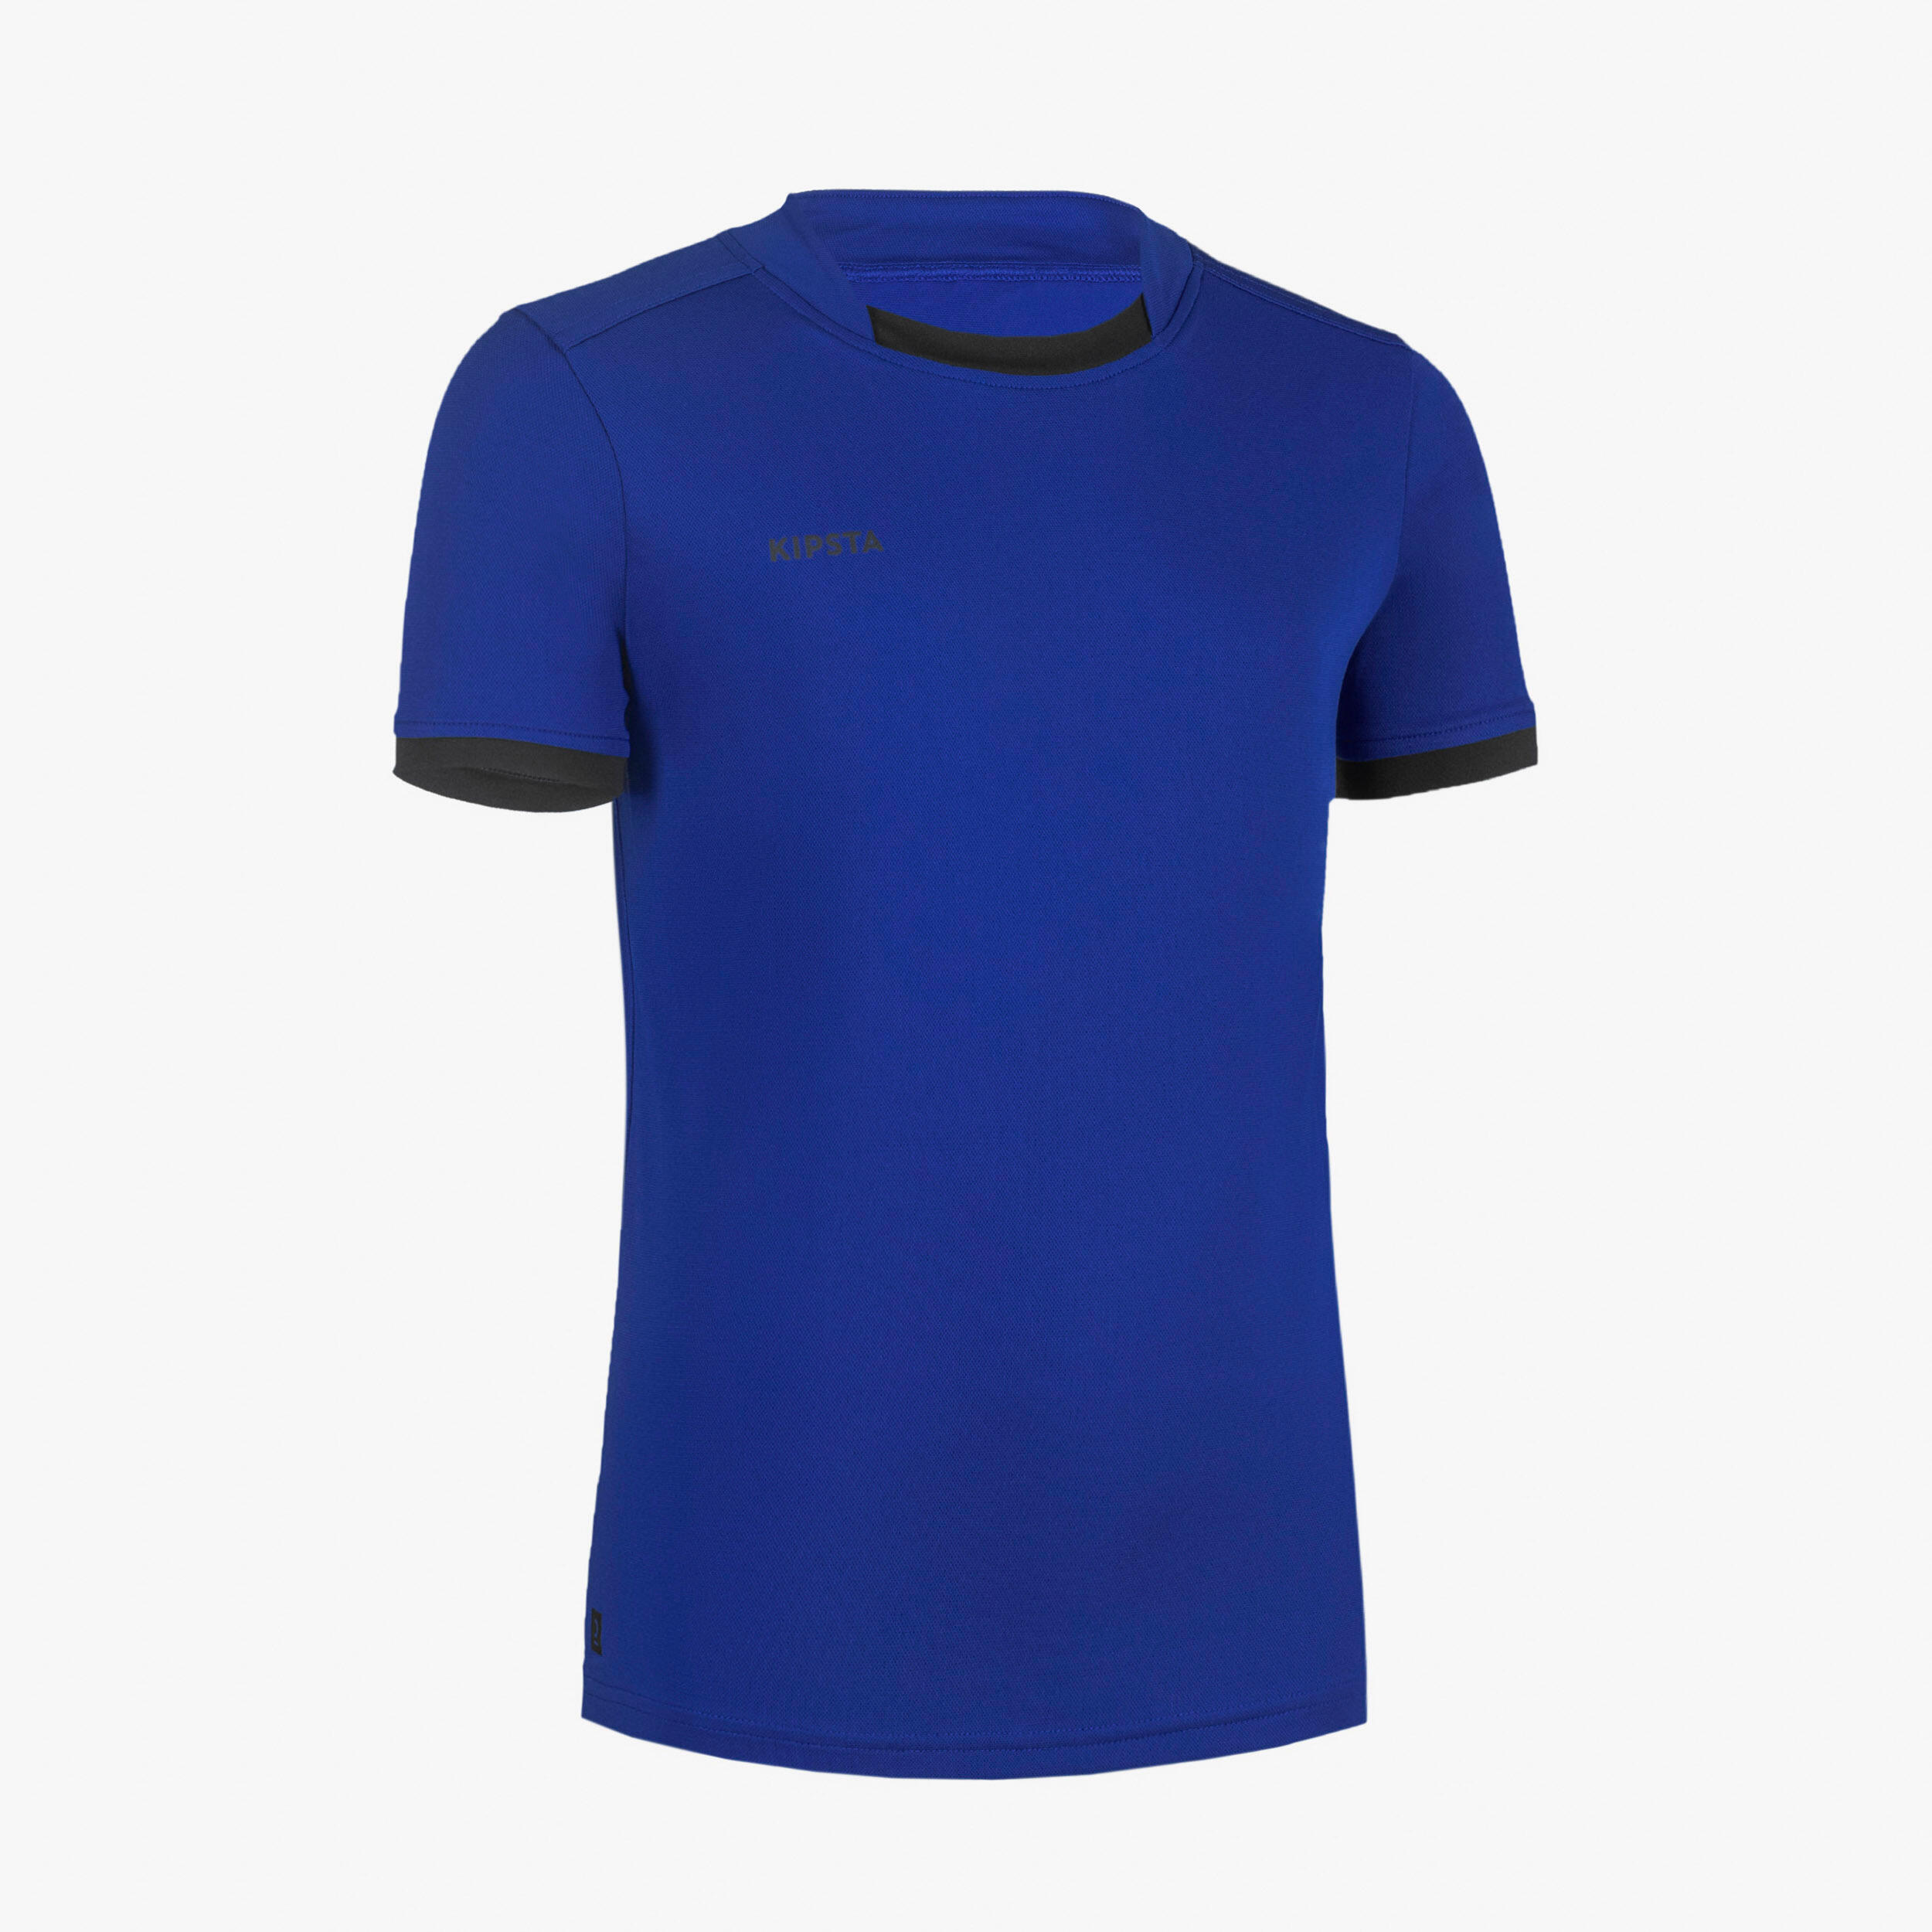 Kids' Short-Sleeved Rugby Shirt R100 - Blue 1/4